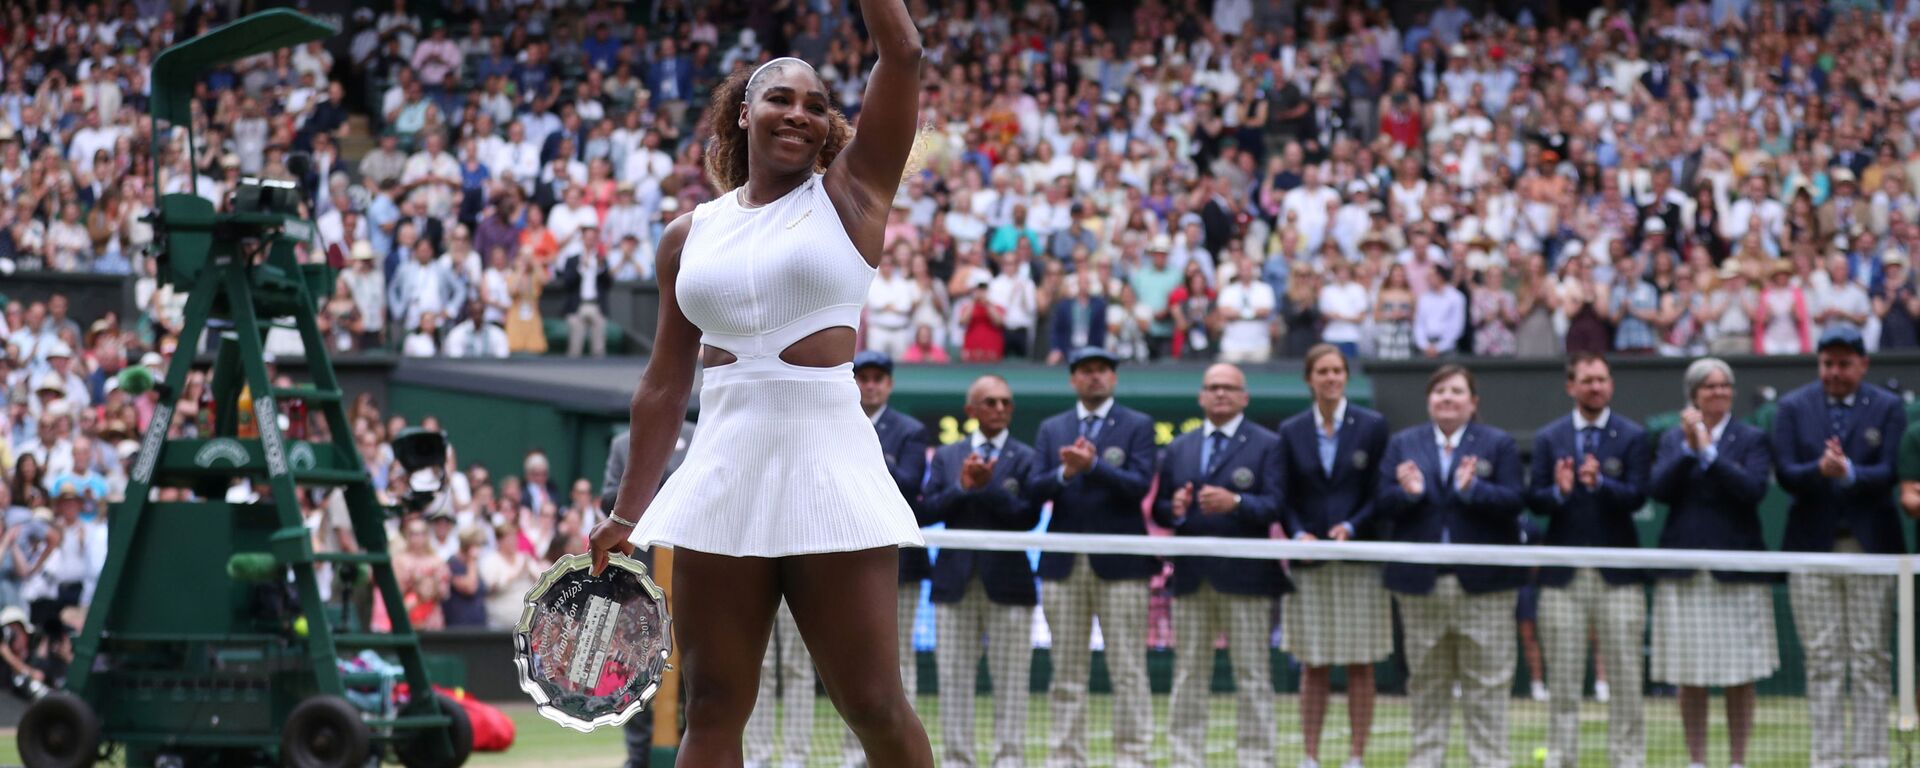 Serena Williams, tenista estadounidense - Sputnik Mundo, 1920, 06.08.2019